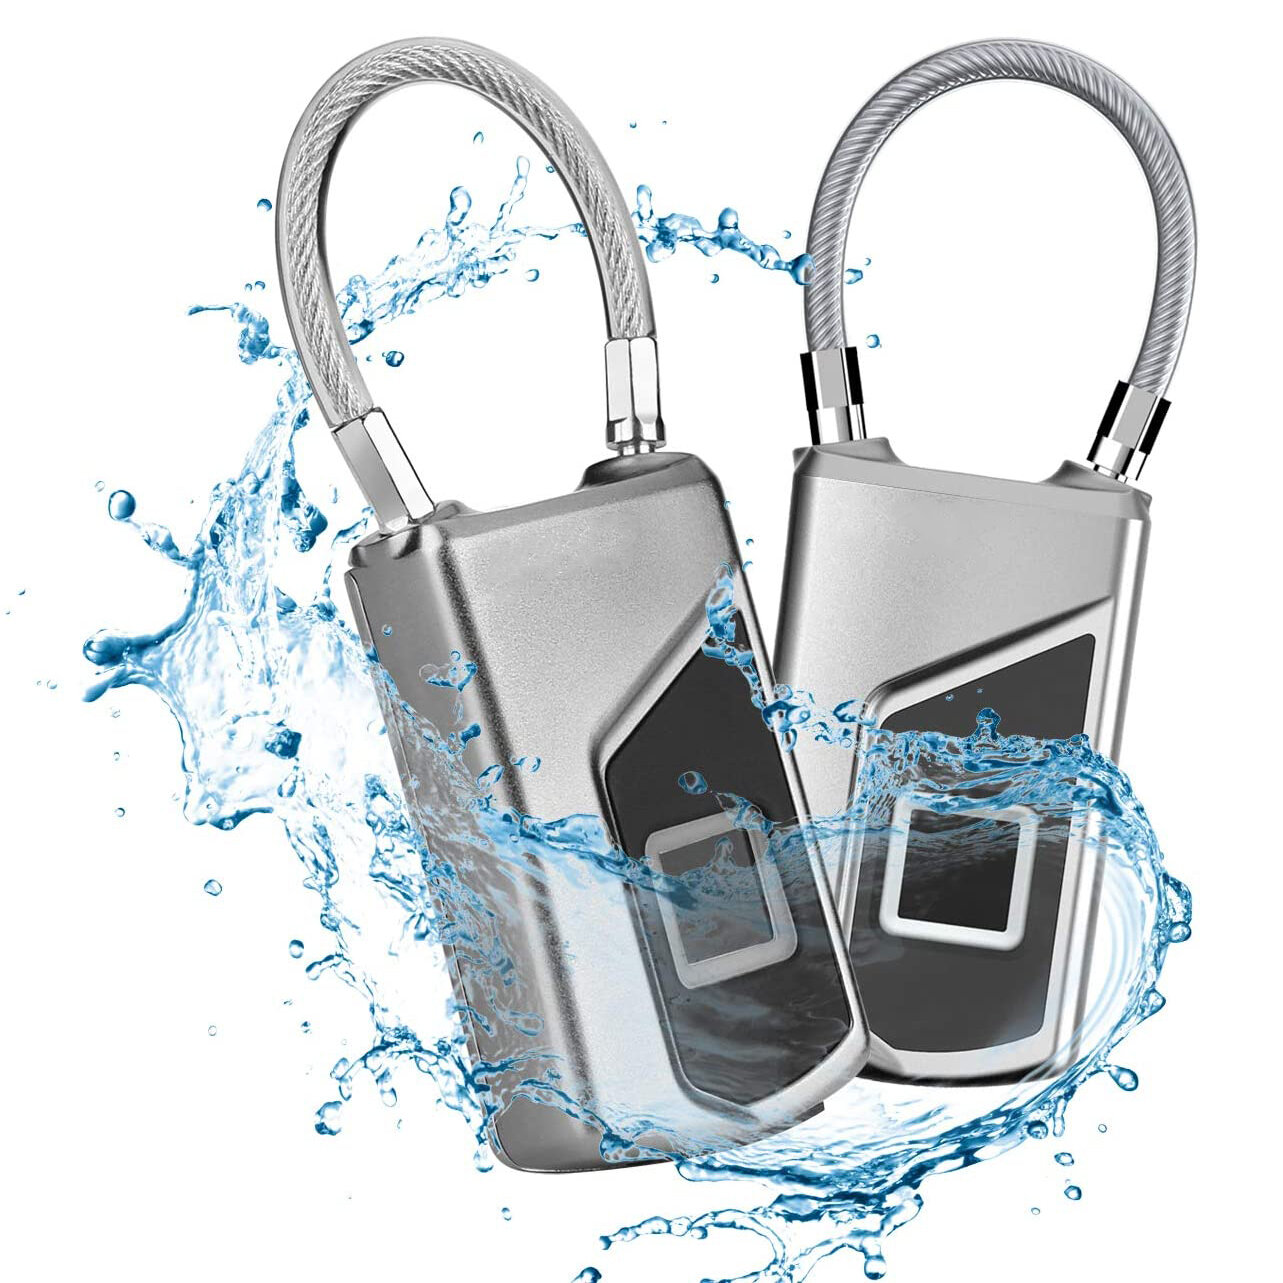 IPRee® Smart Fingerprint cerradura Anti Puerta antirrobo cerradura Carga USB Impermeable Mochila cerradura Candado para puerta Gym Equipaje Maleta Oficina para bicicletas